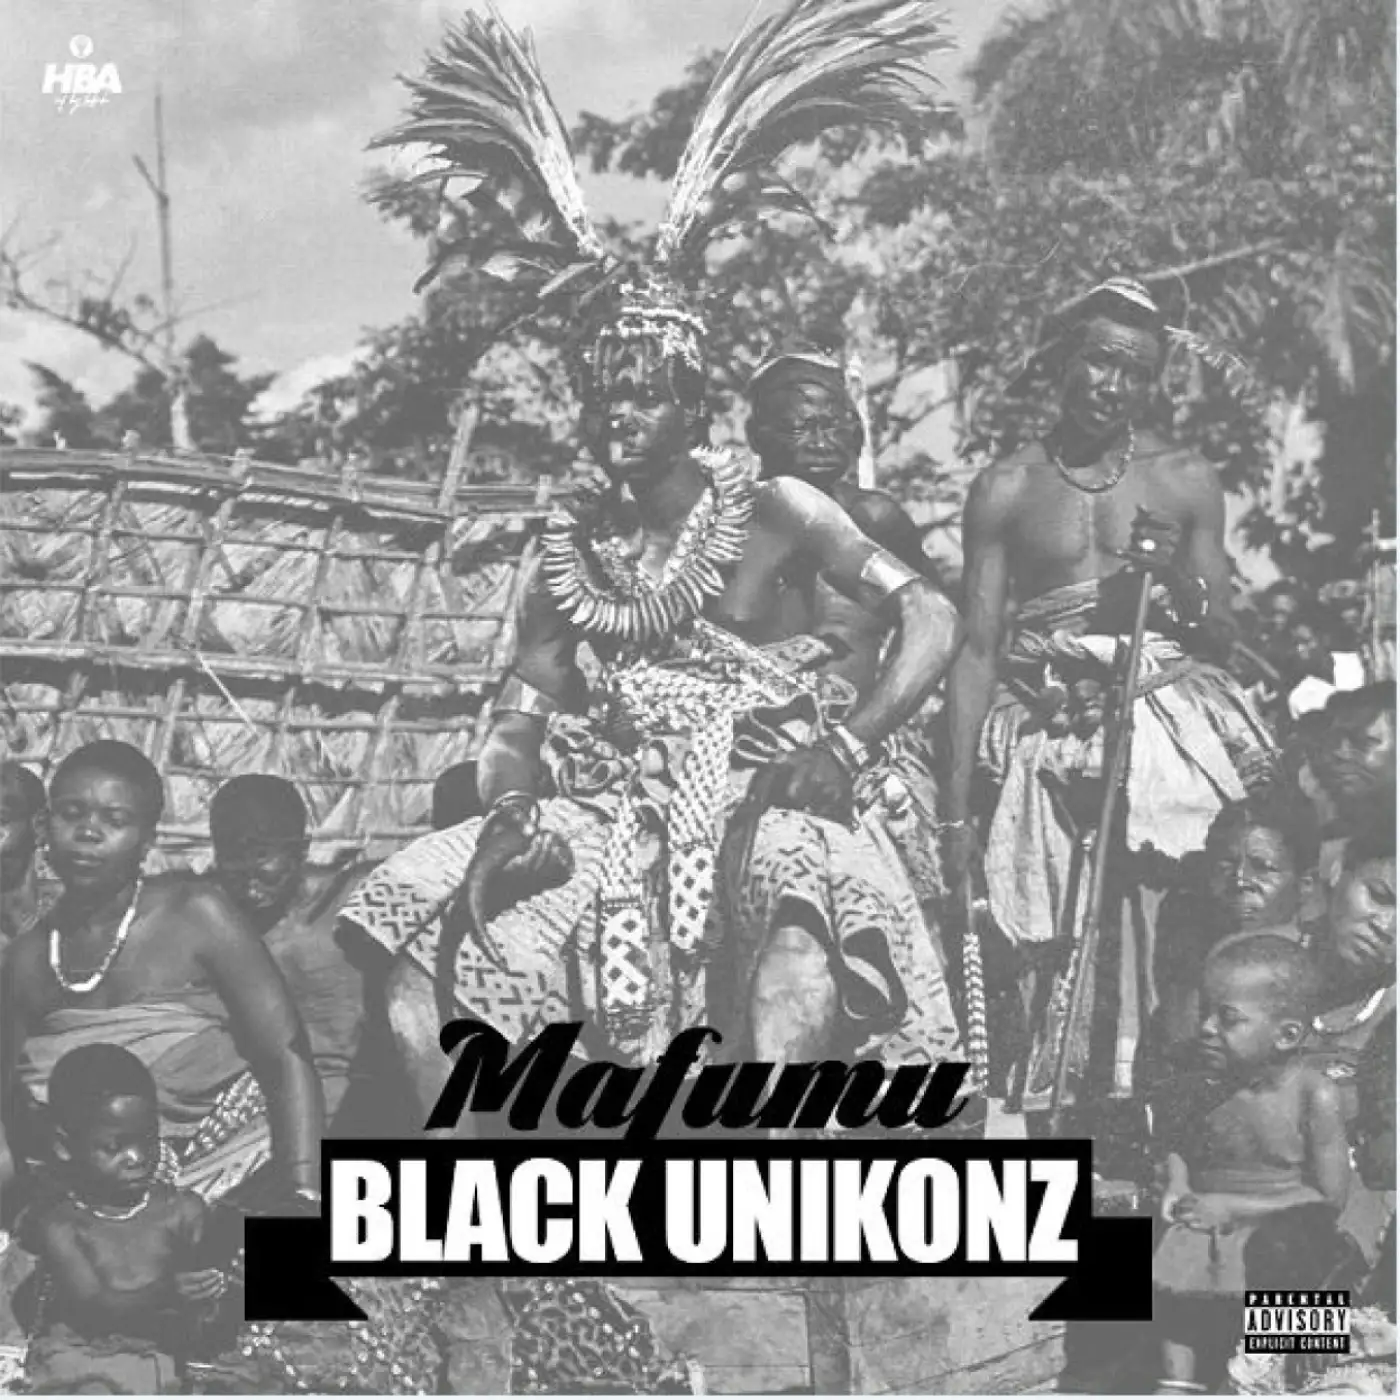 BLACKUNIKONZ-BLACKUNIKONZ - Intro-song artwork cover